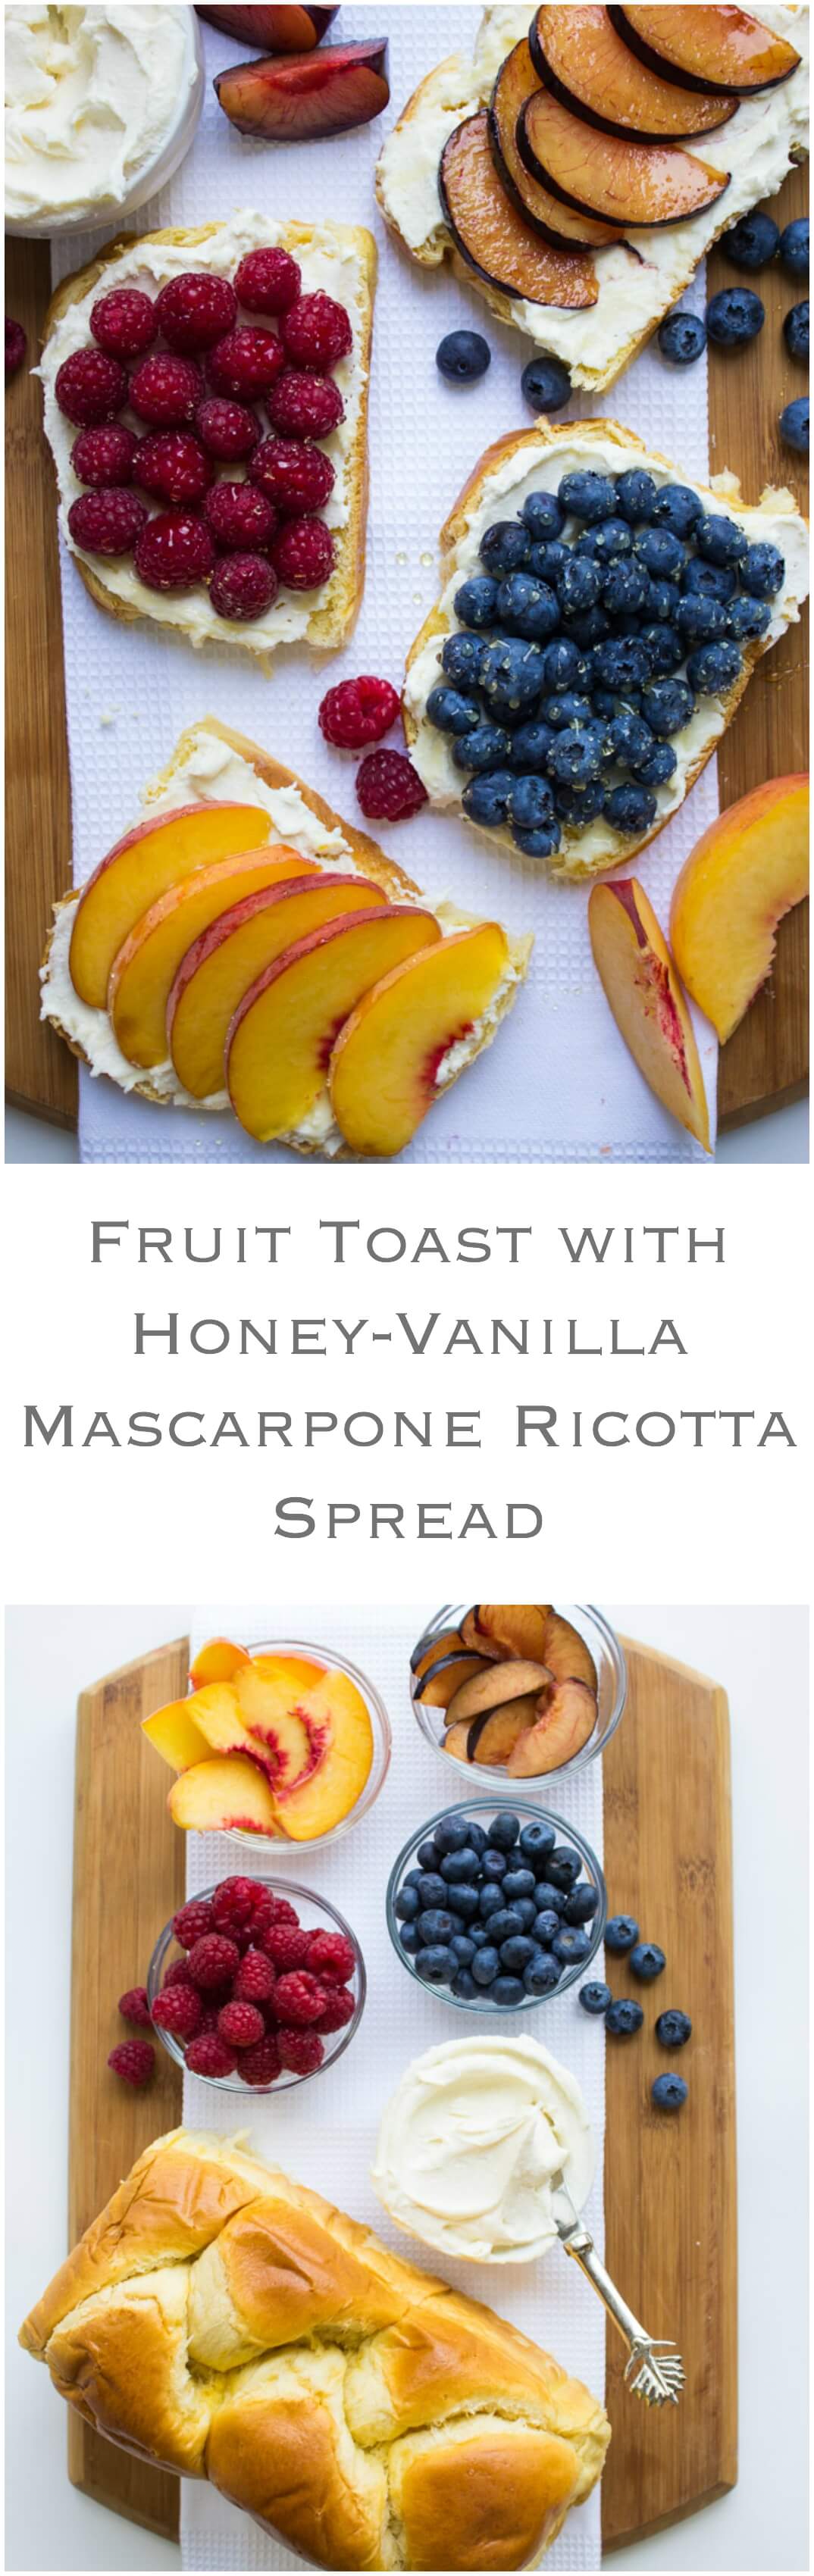 Luscious honey-vanilla flavored mascarpone ricotta spread on pillowy soft French Brioche toast and topped with fresh fruit | littlebroken.com @littlebroken